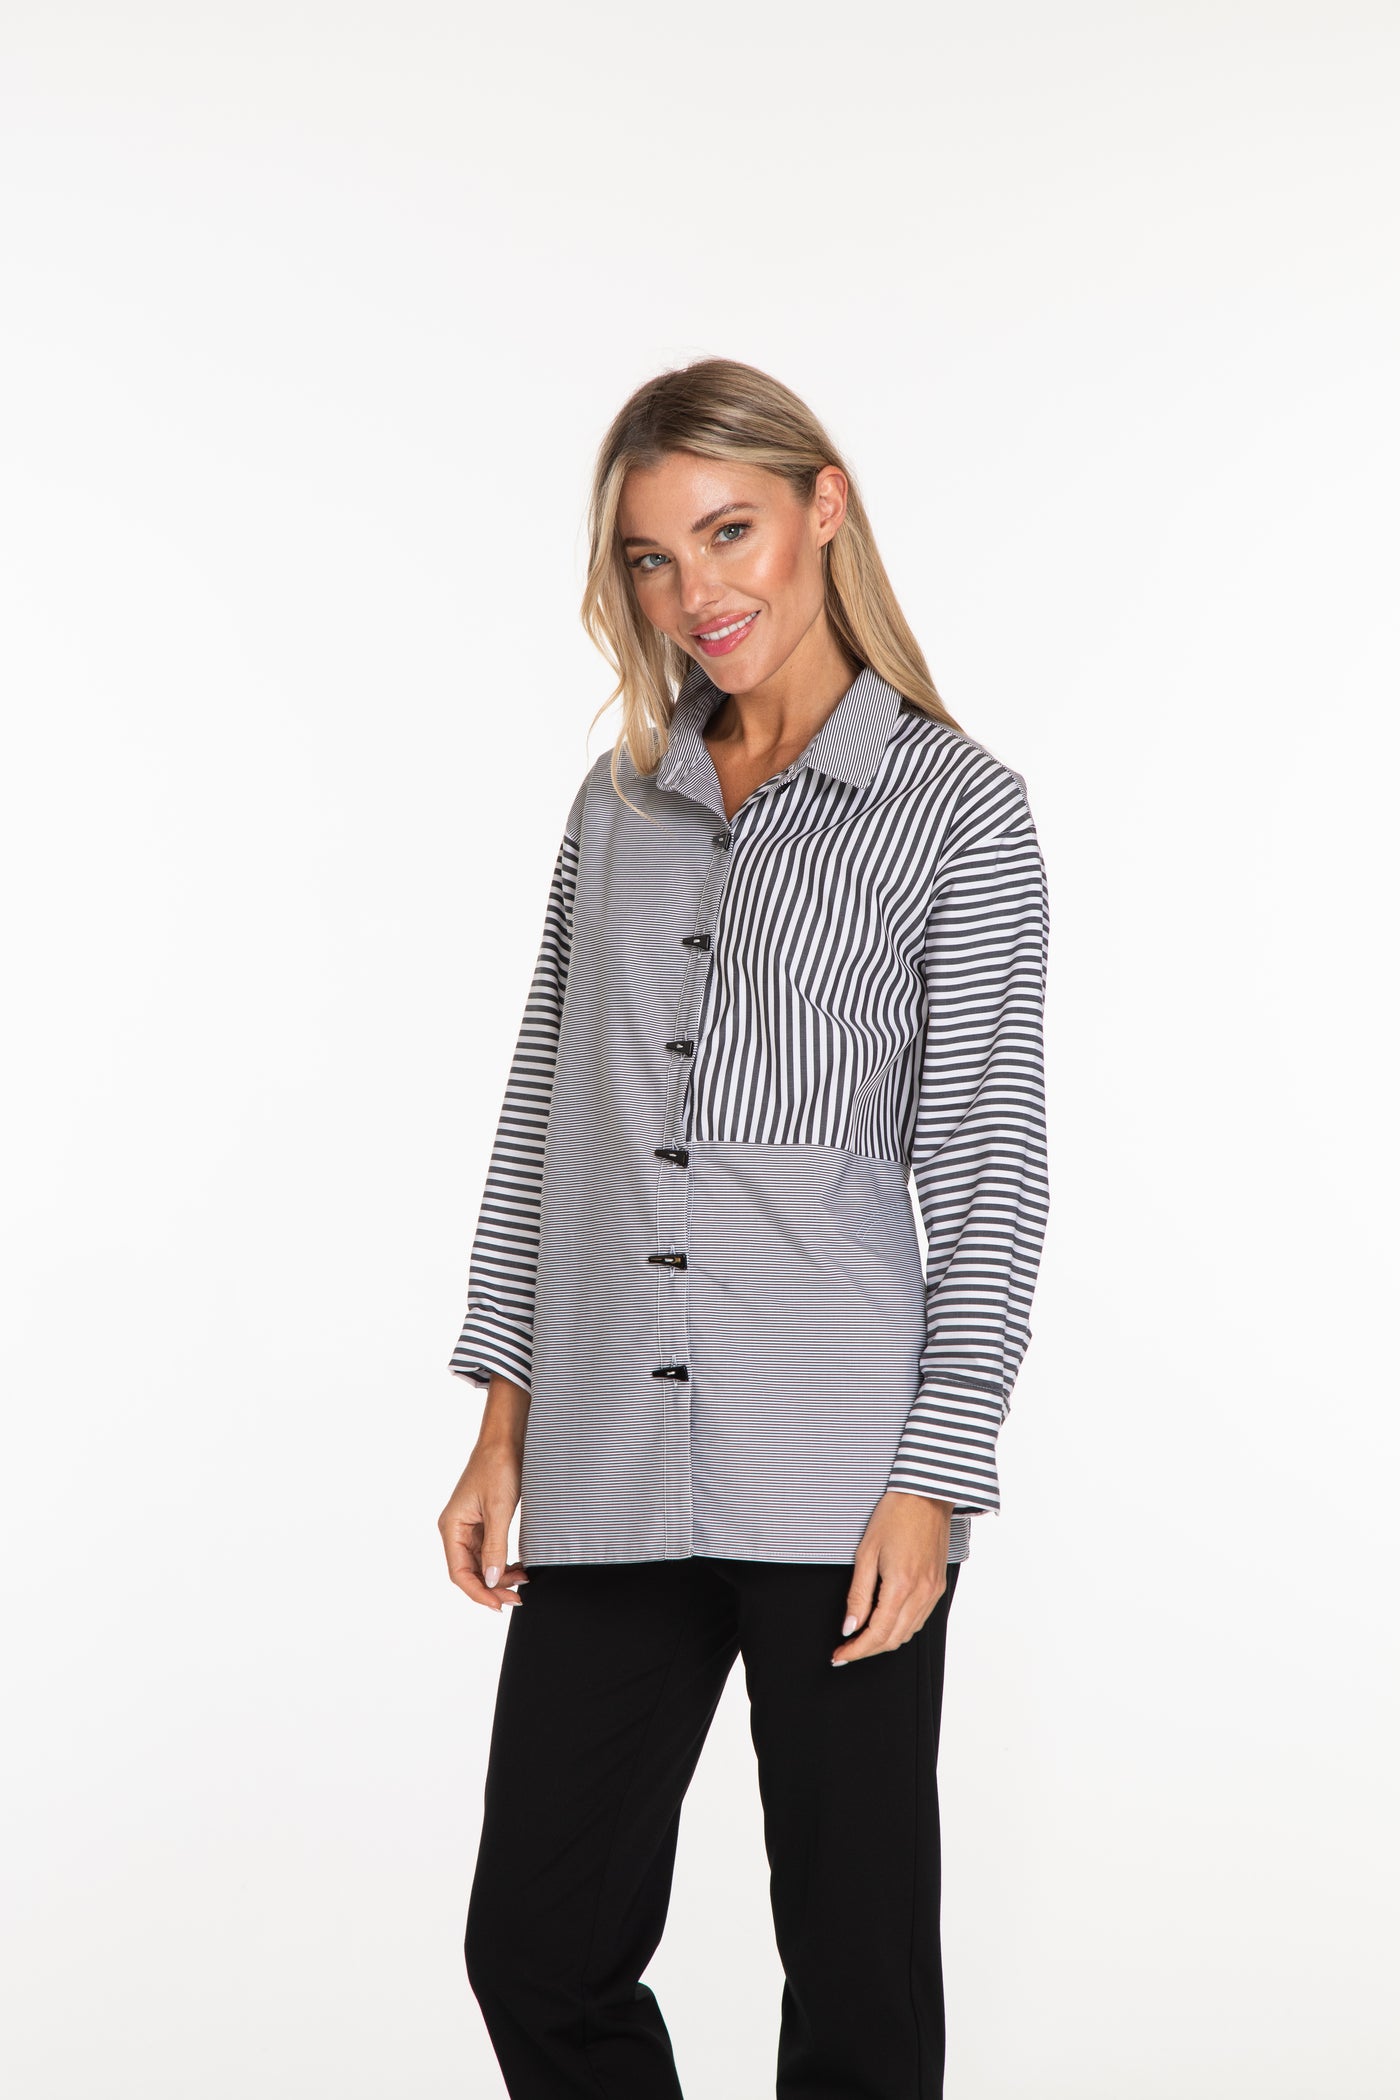 Striped Poplin Shirt - Women's - Black